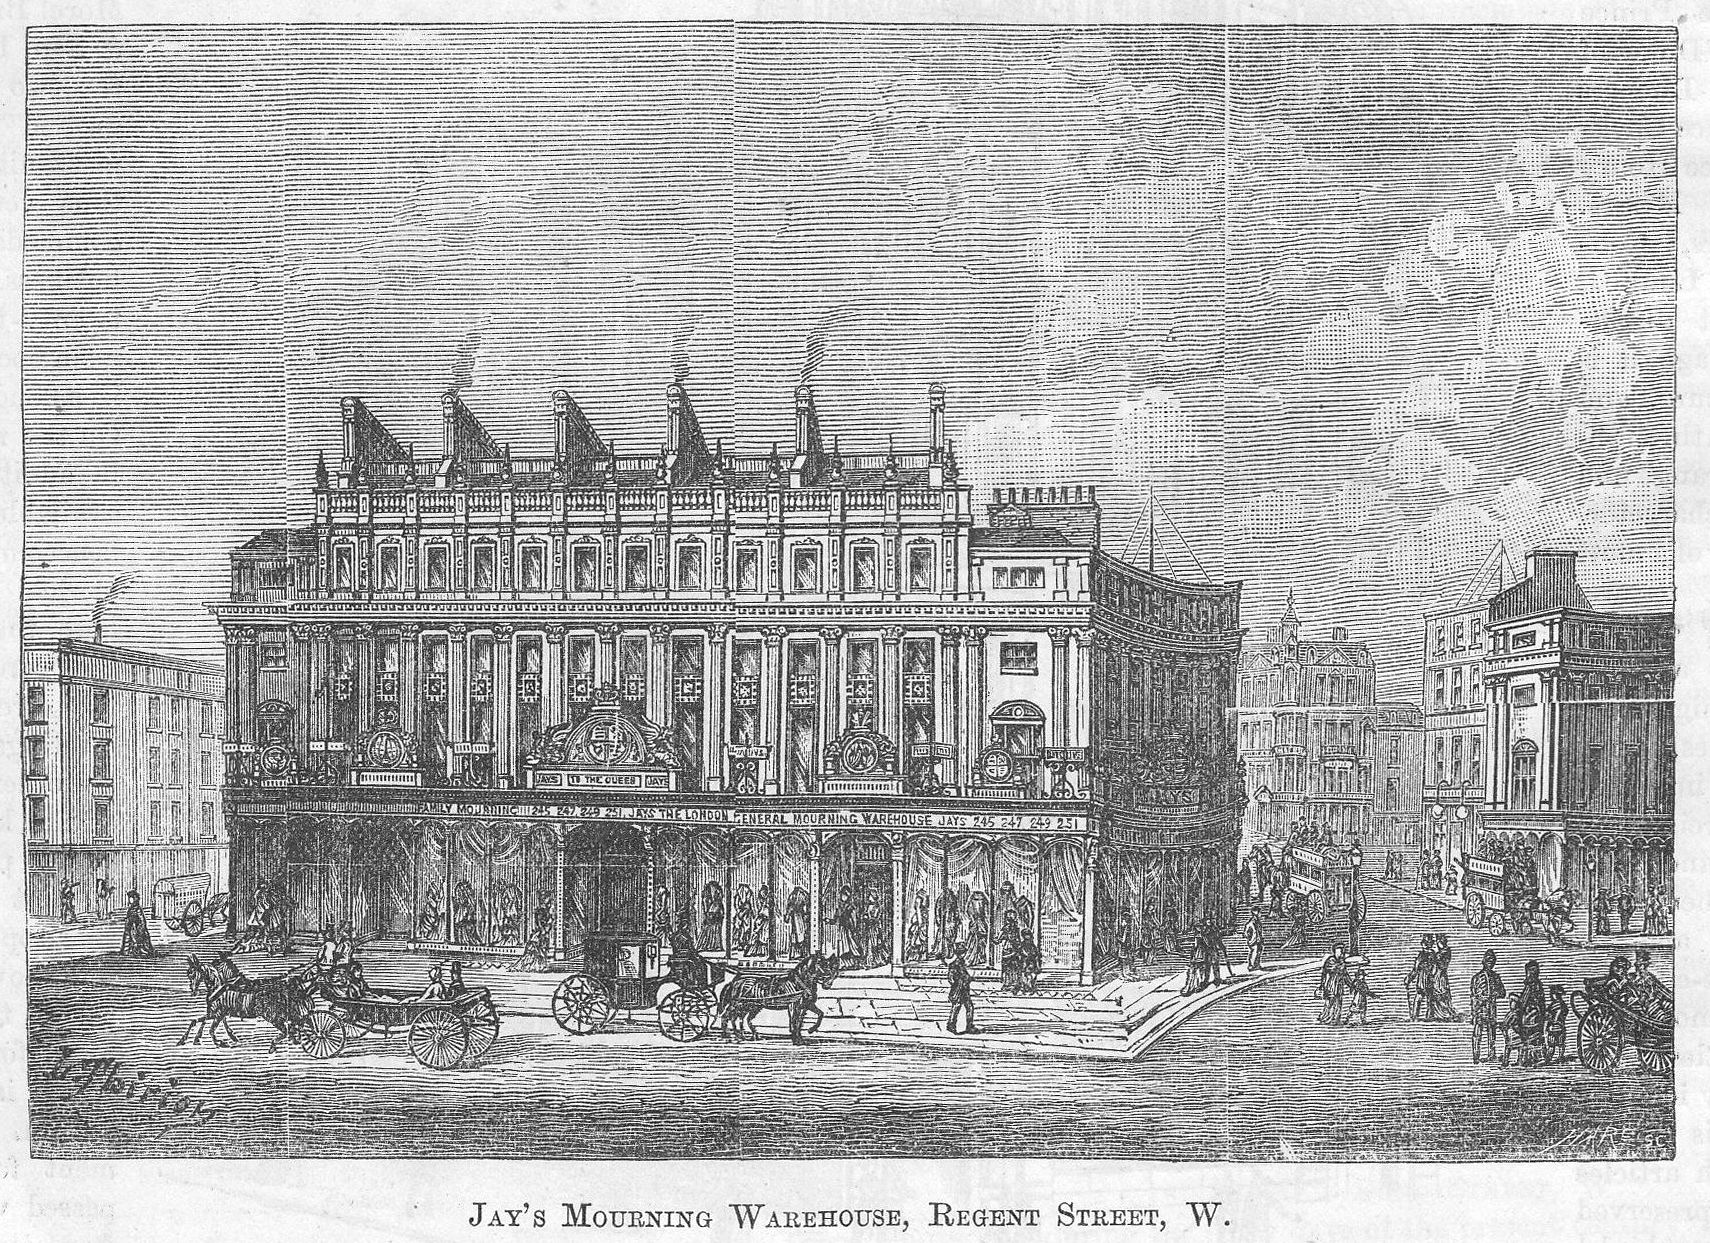 http://messybeast.com/1893-illustrated-london/1893-illustrated-london-41.jpg